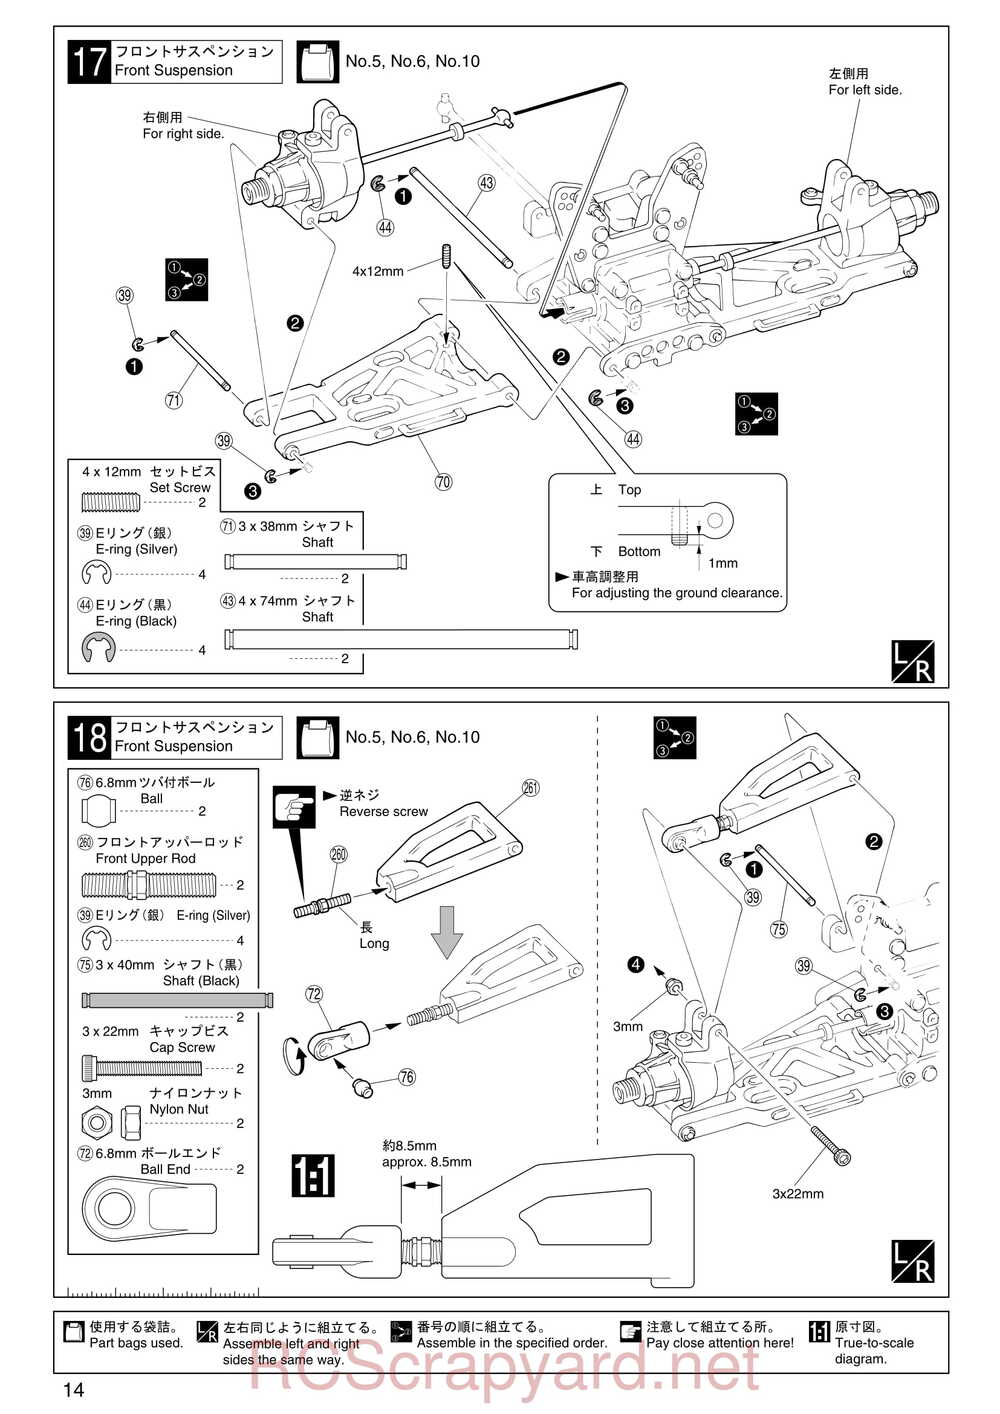 Kyosho - 31271 - Inferno-MP-7-5-Yuichi 2 - Manual - Page 14